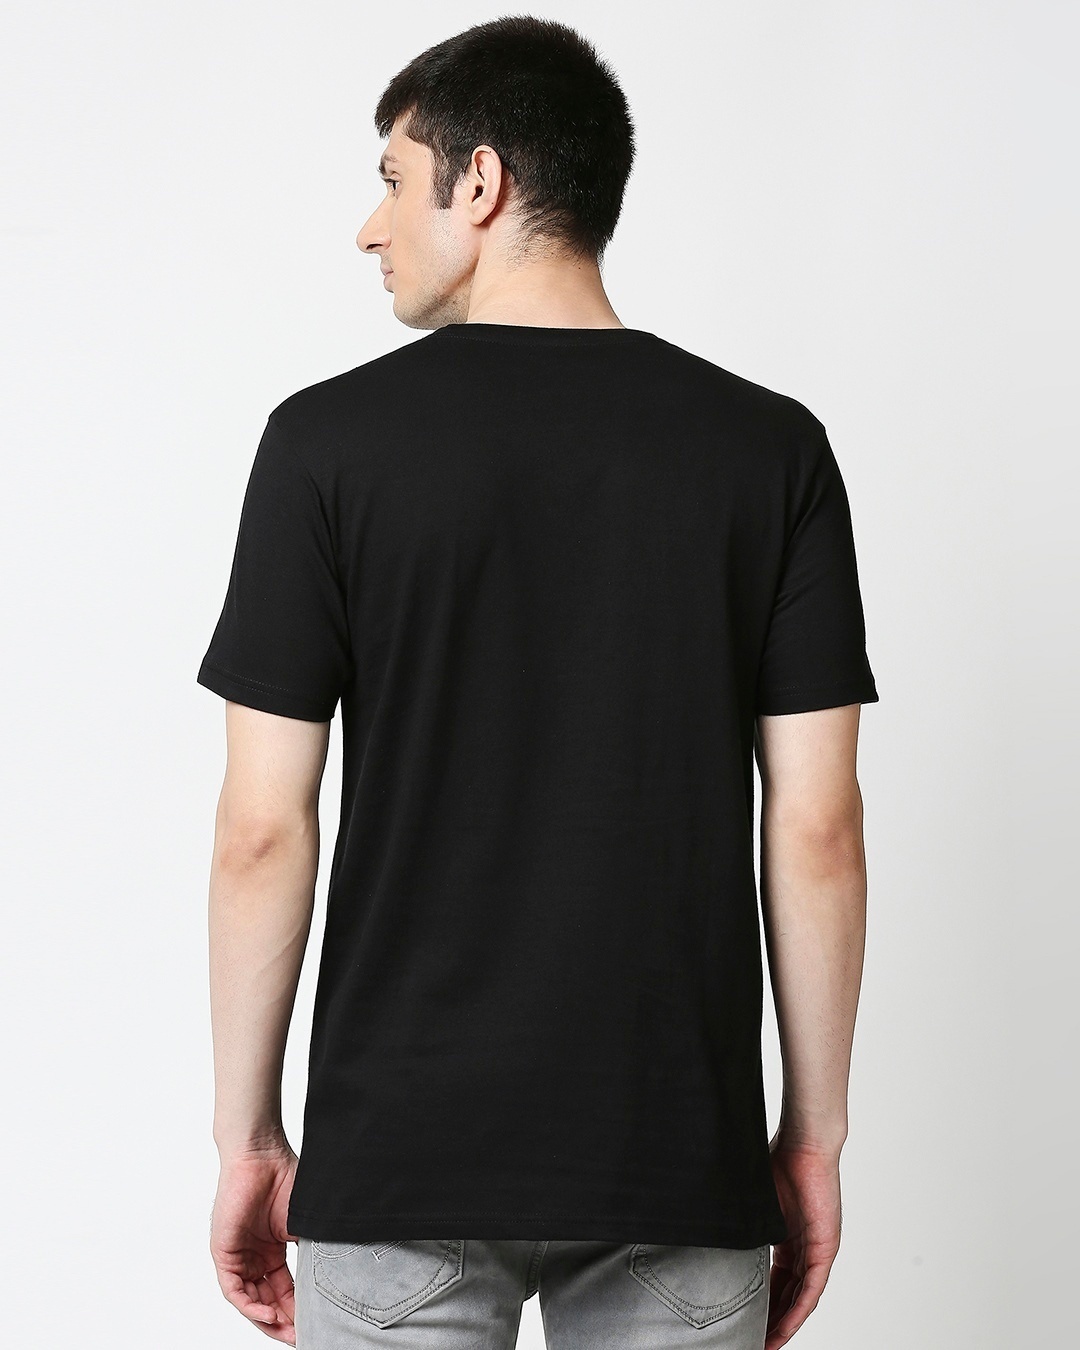 Shop Goofy Half Sleeves Hperprint T-Shirt (DL) Black-Design